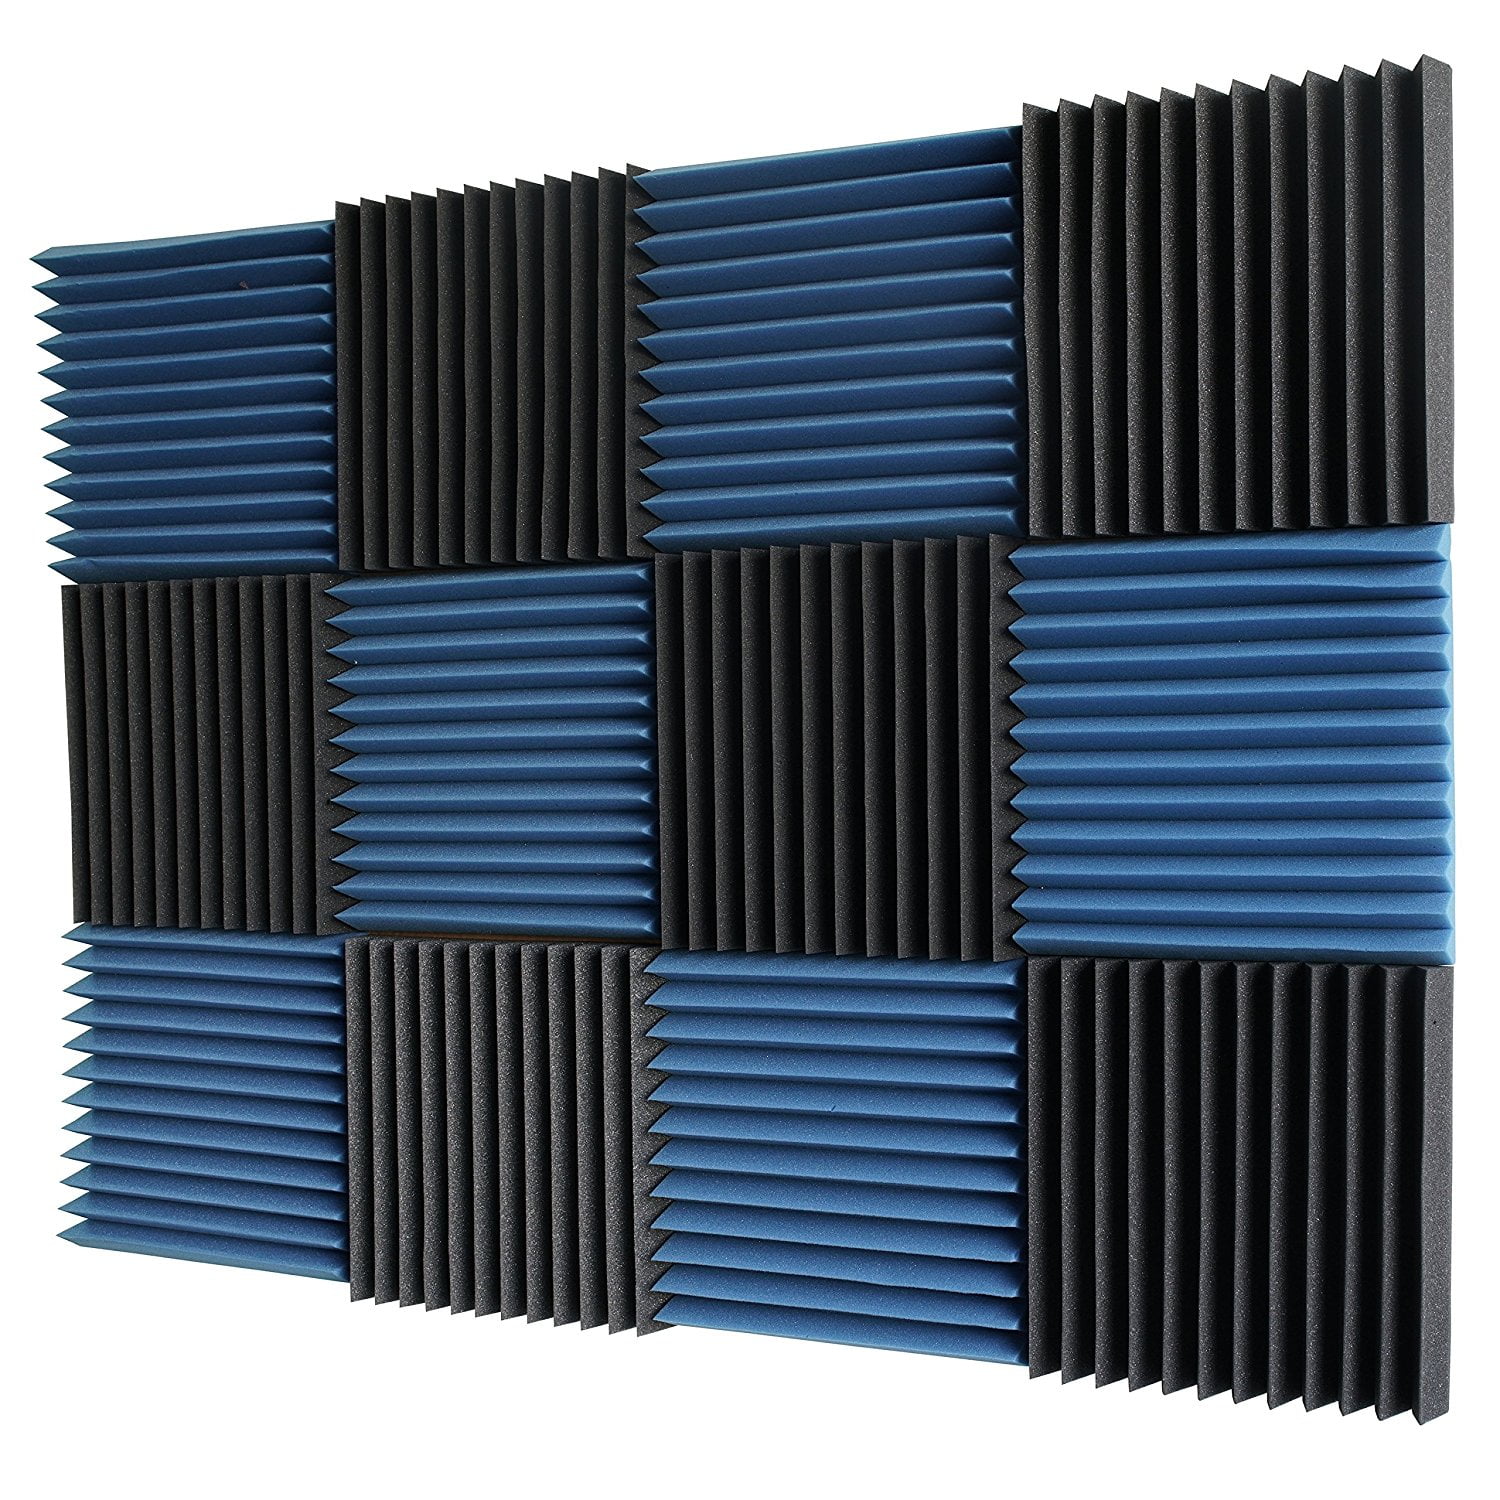 24 Black & Blue Pack Acoustic Foam Tiles Wall Record Studio Soundproof ...